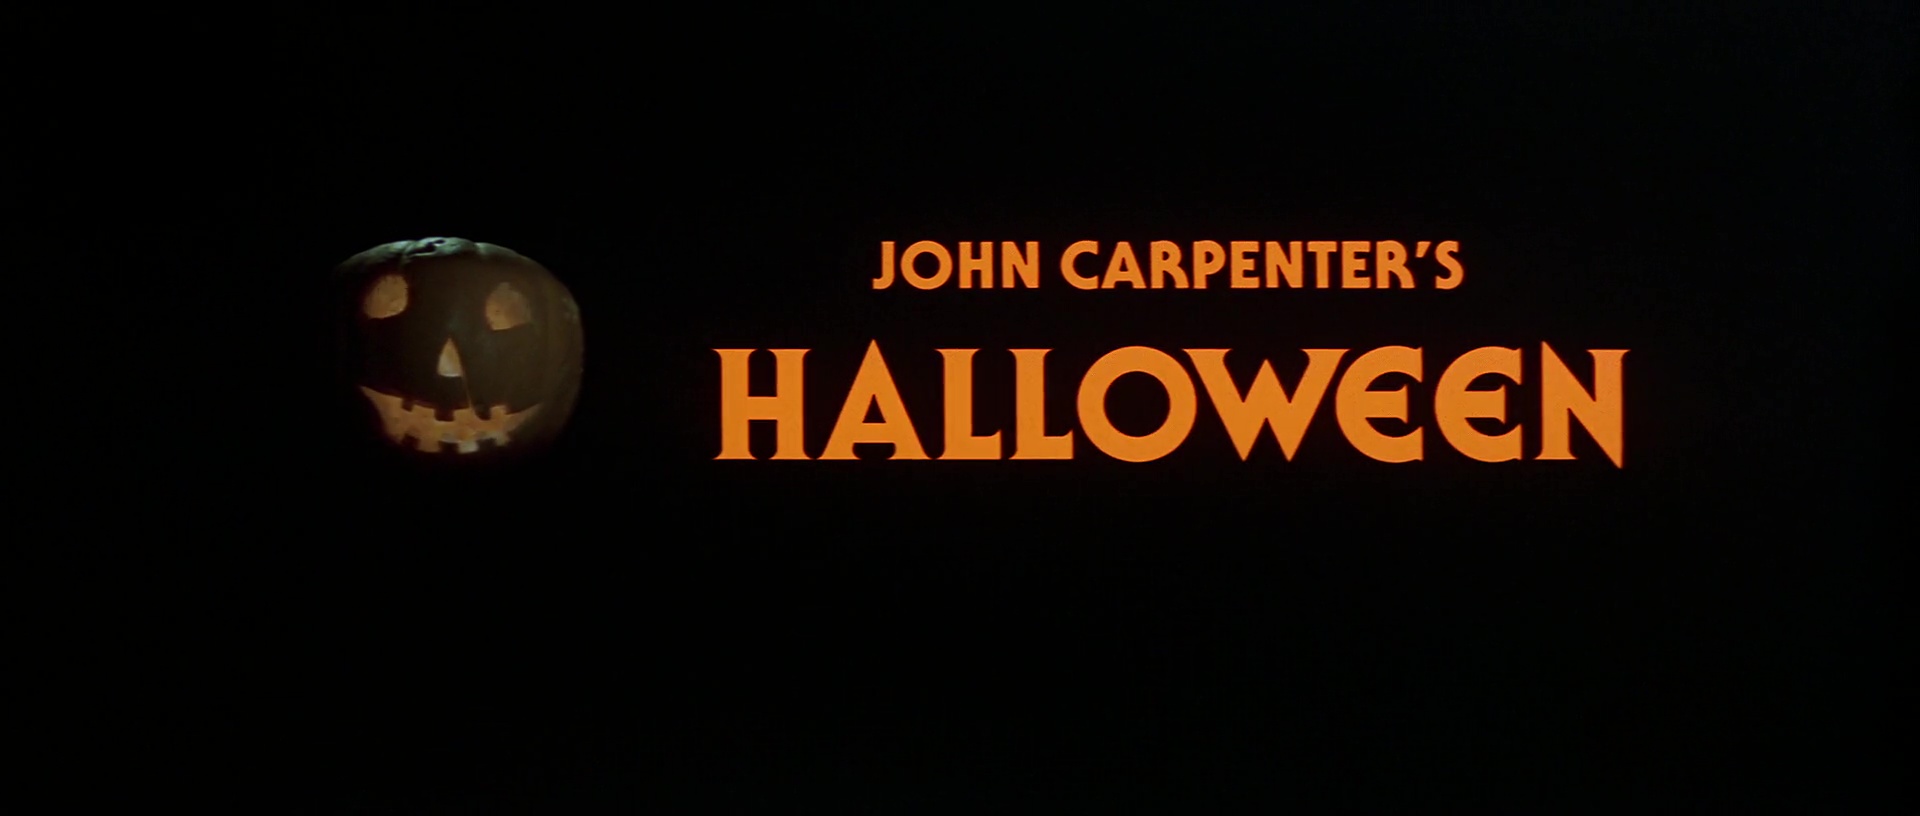 HALLOWEEN de John Carpenter (1978)